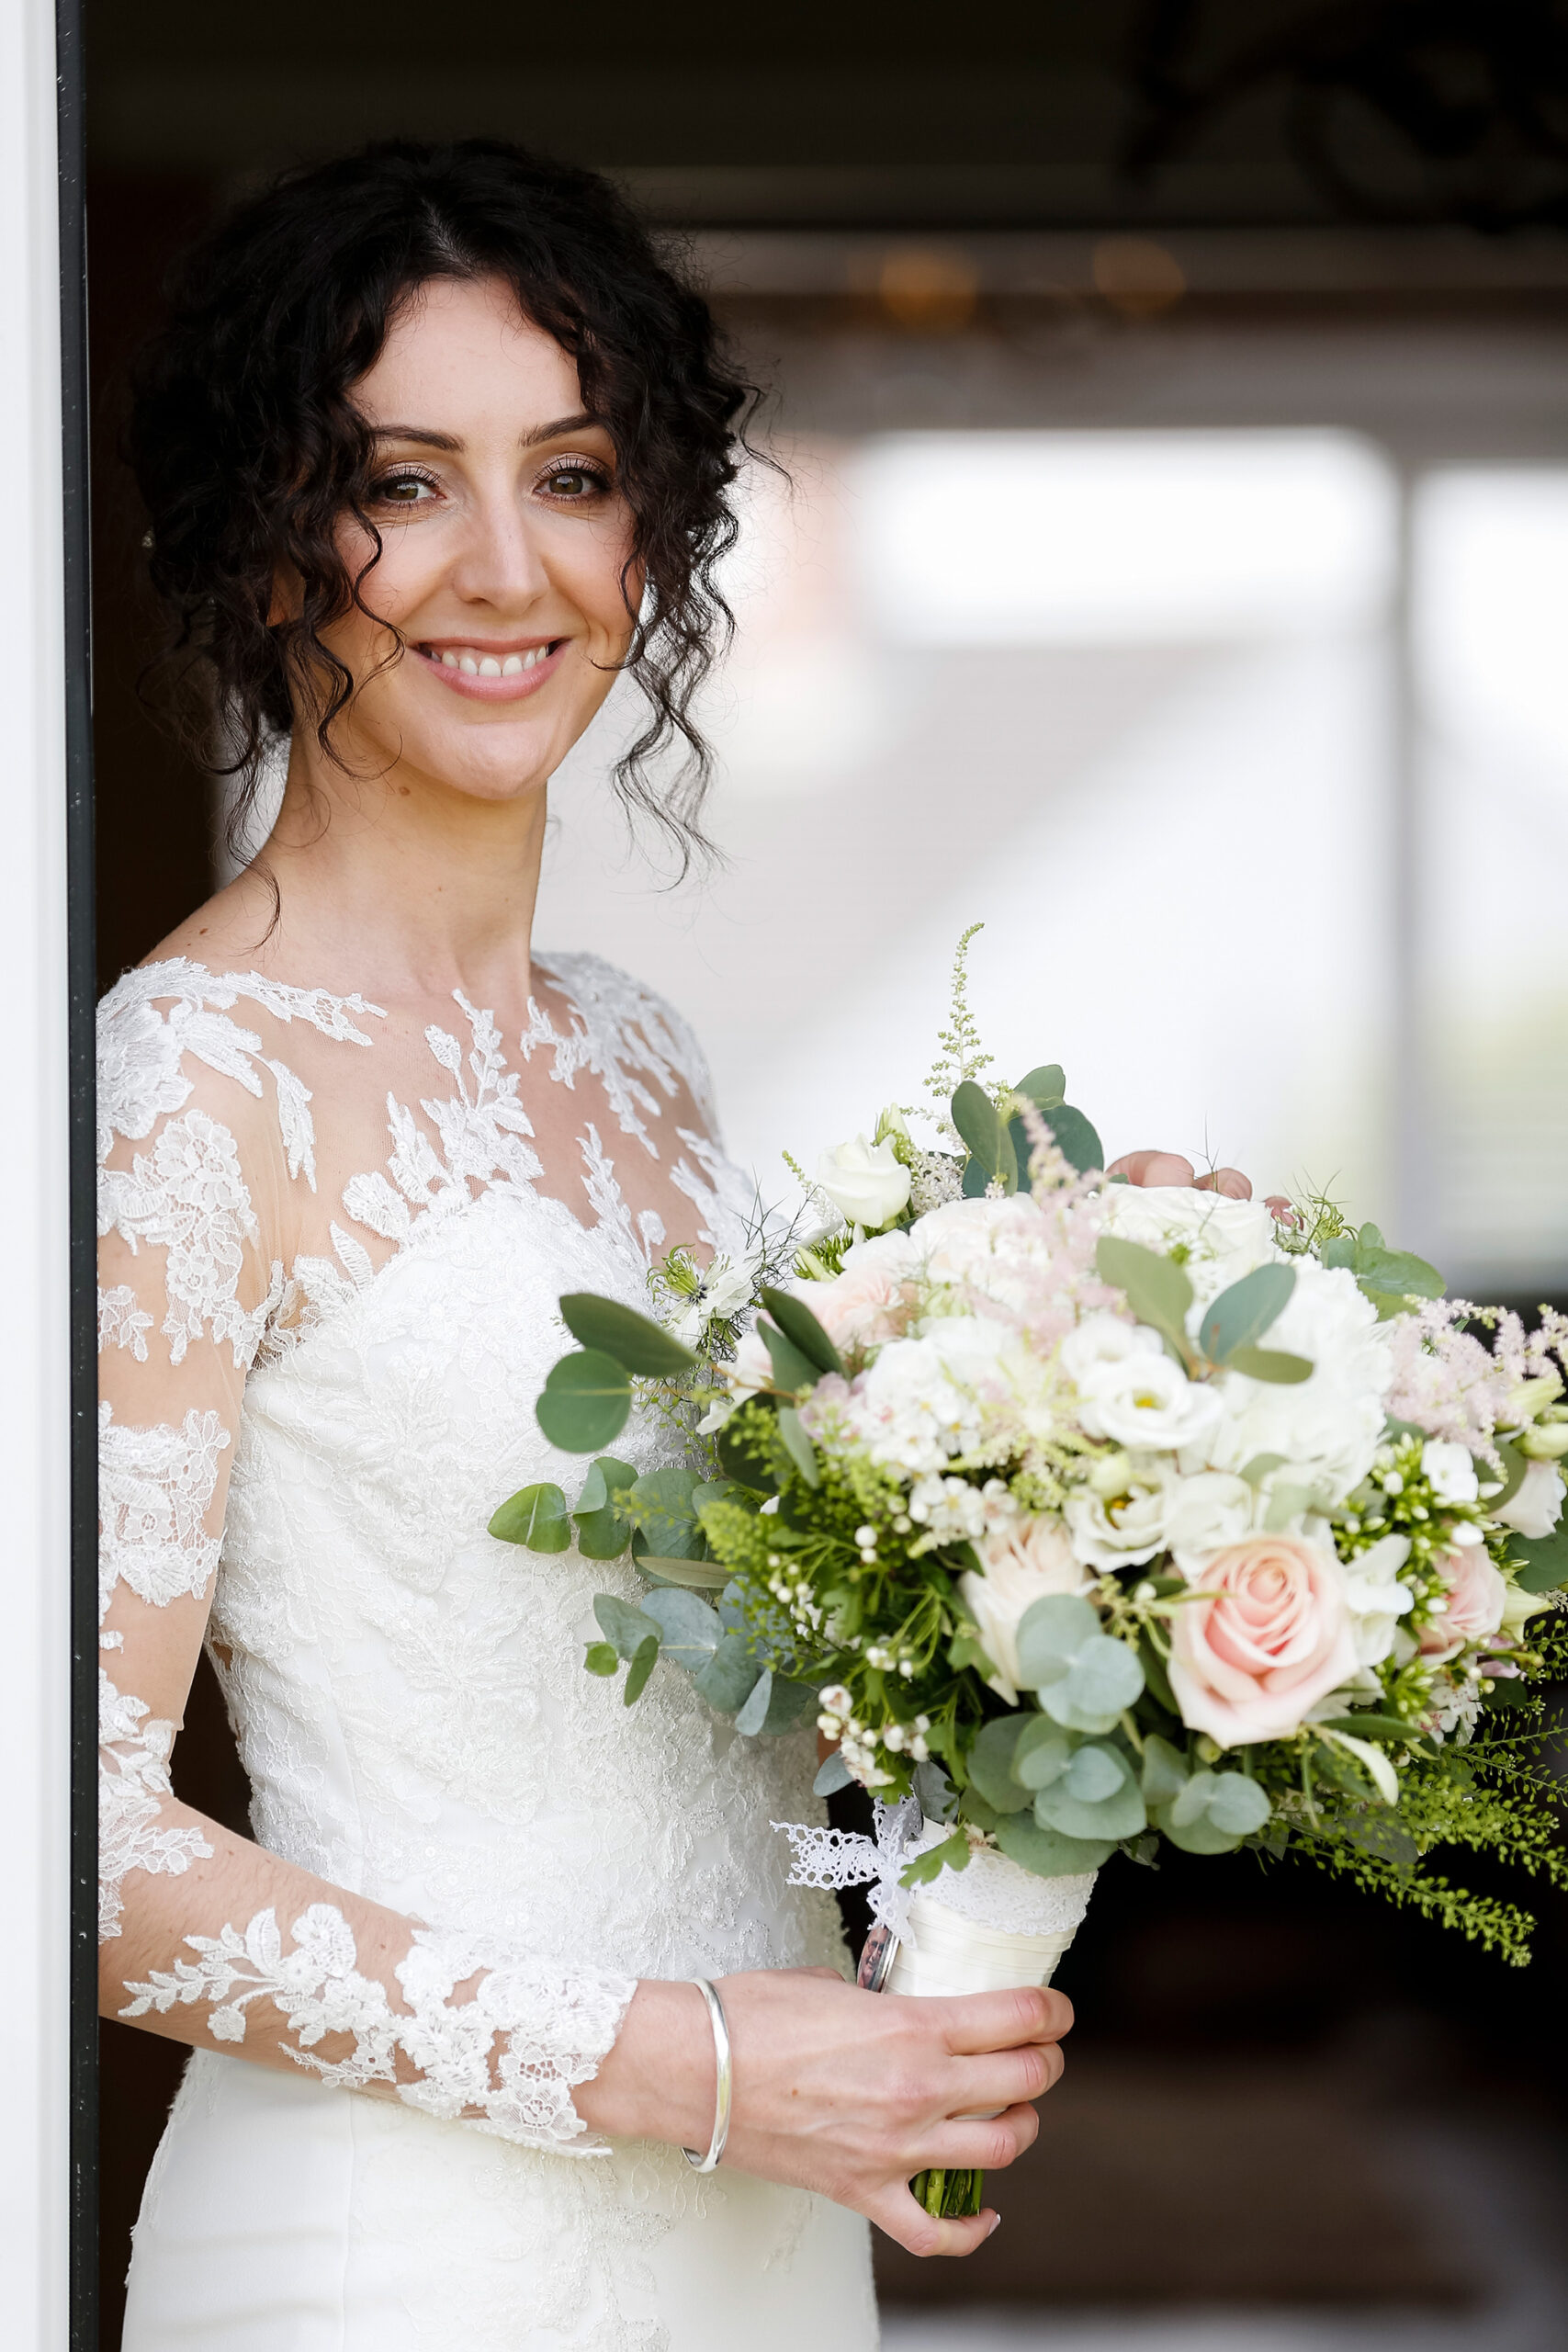 Luciana Chris Romantic Wedding Purecreations Photography 012 scaled